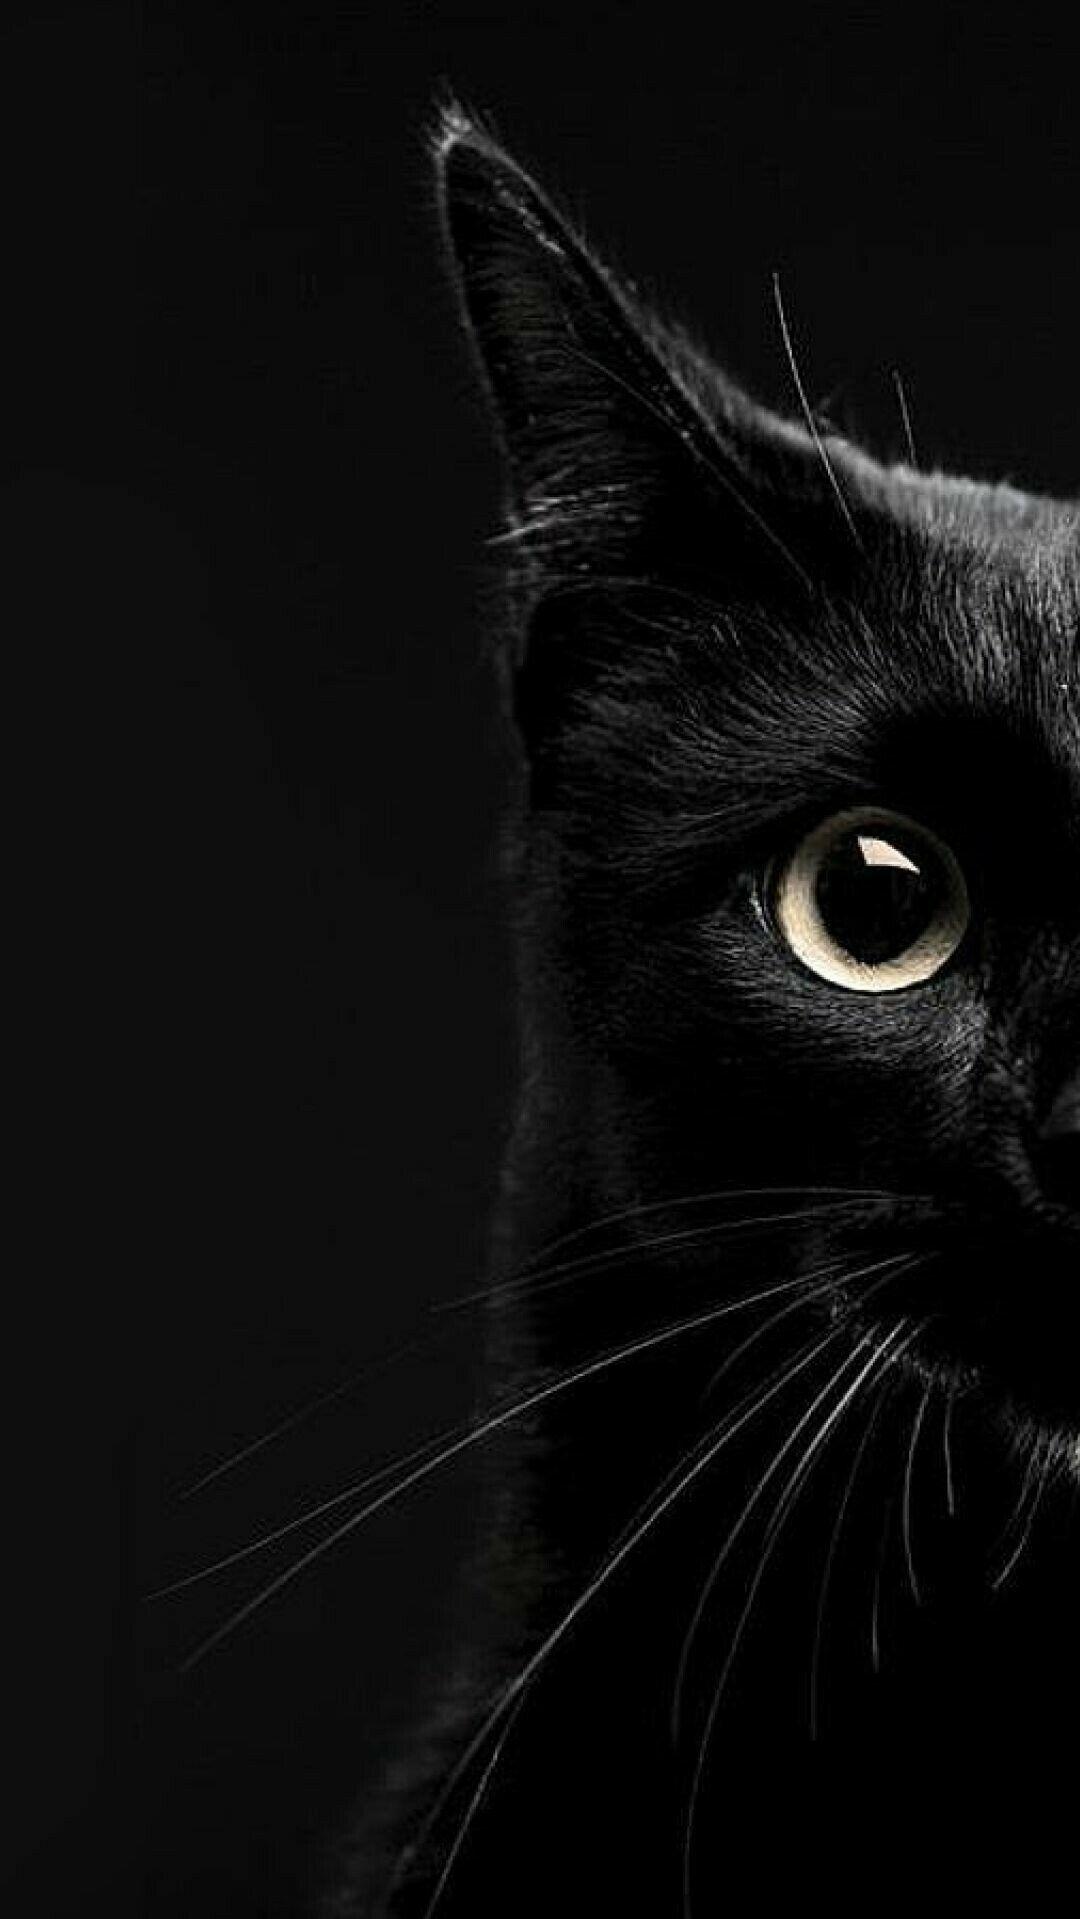 Aesthetic Black Cat Wallpaper Background Beautiful Best